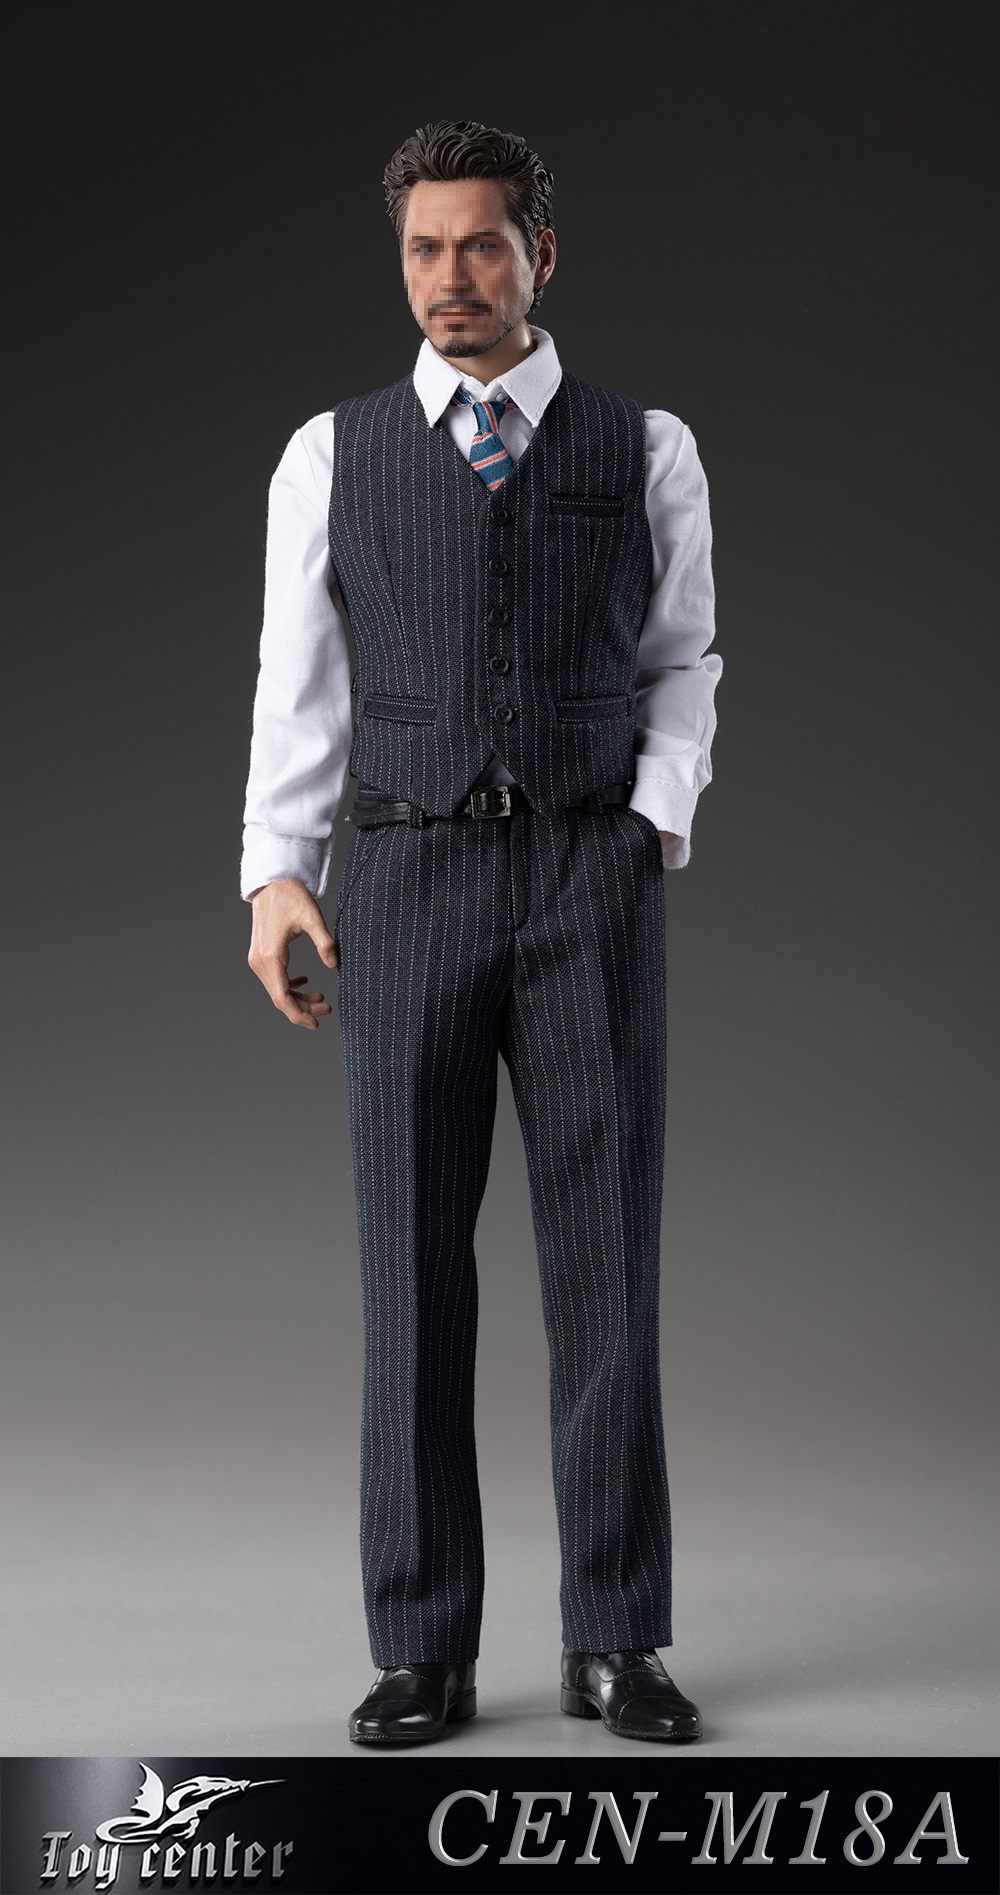 StripedSuit - NEW PRODUCT: Toy center: 1/6 British Gentleman Tony Striped Suit CEN-M18 Three Colors 15522212